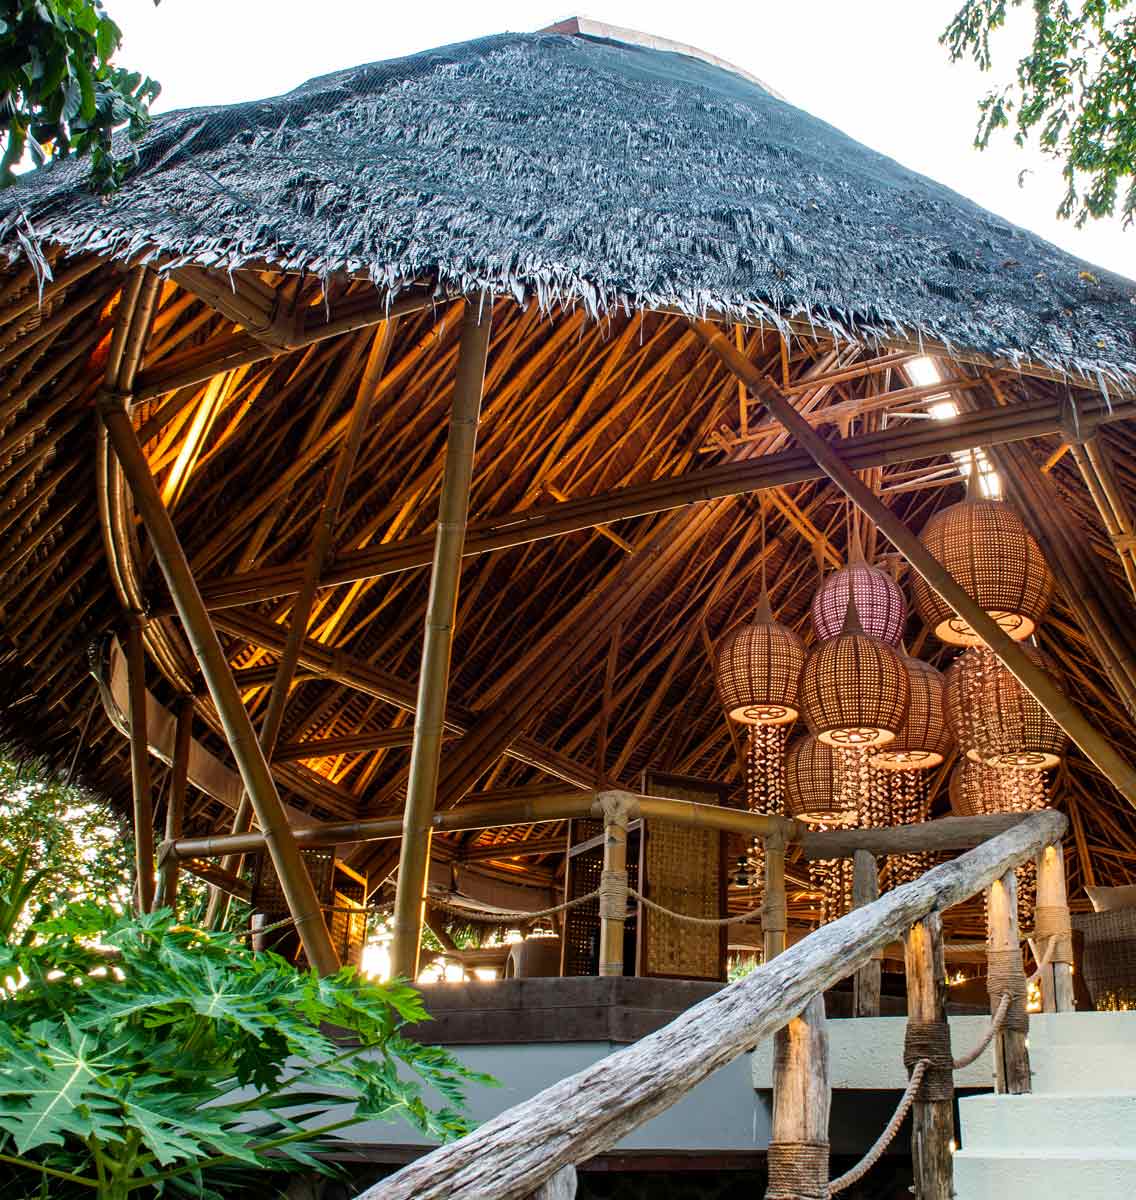 Treetops hotel restaurant at Bawah Reserve, Indonesia